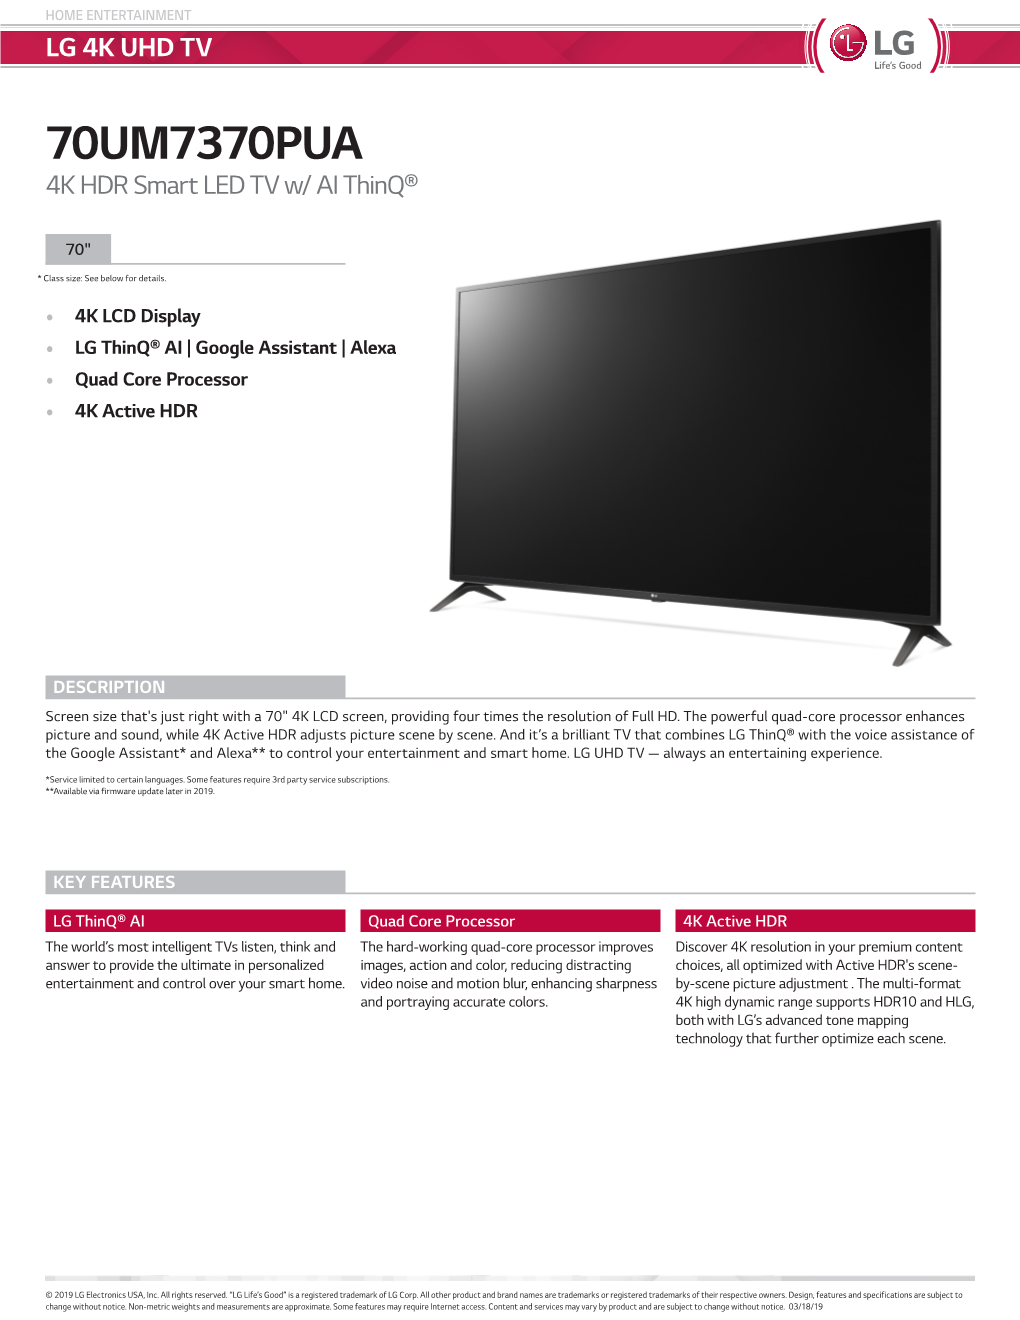 LG 70" Smart TV